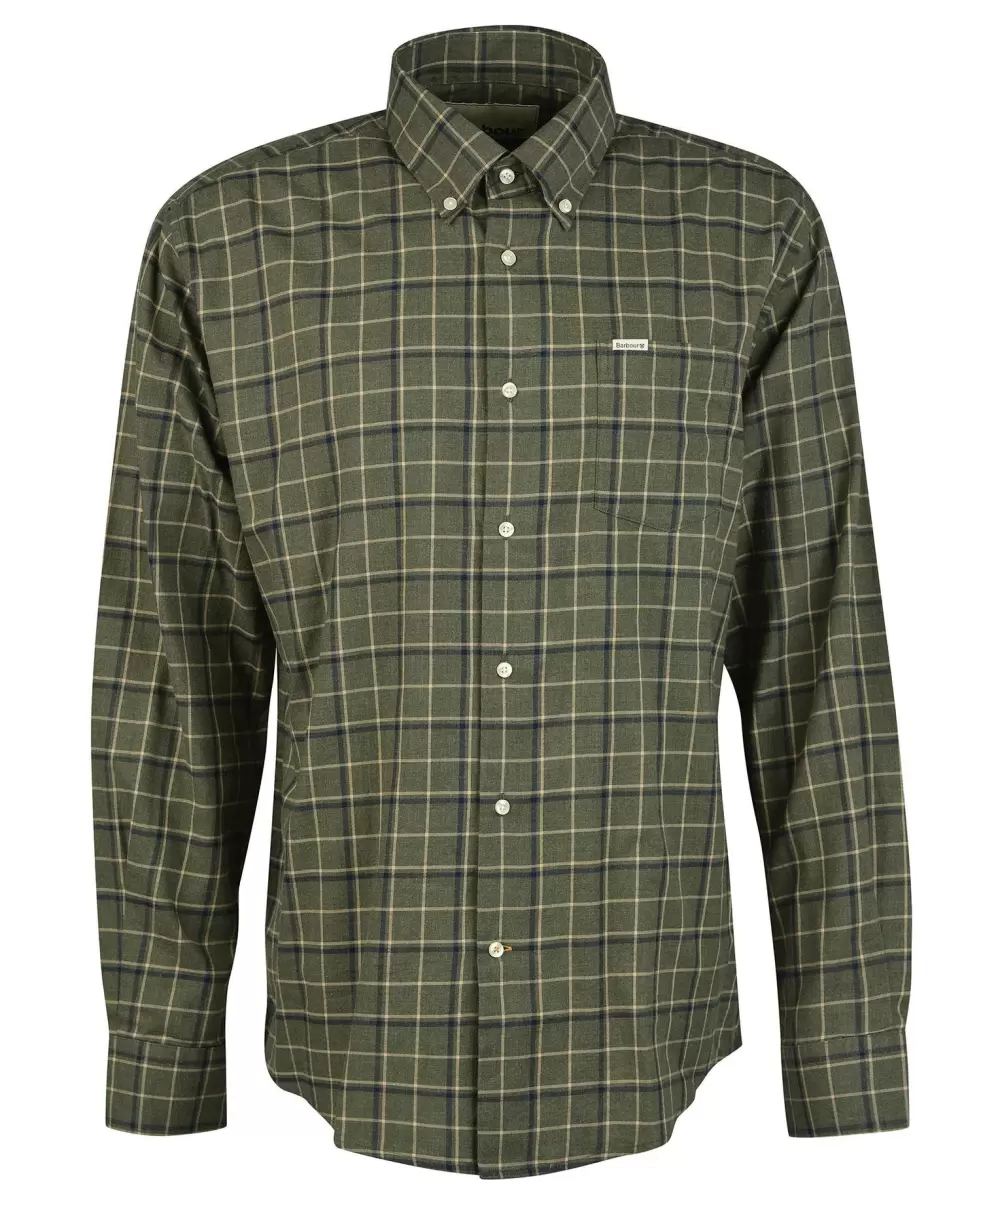 Exceed Olive Shirts Barbour Pelton Regular Shirt Men - 1